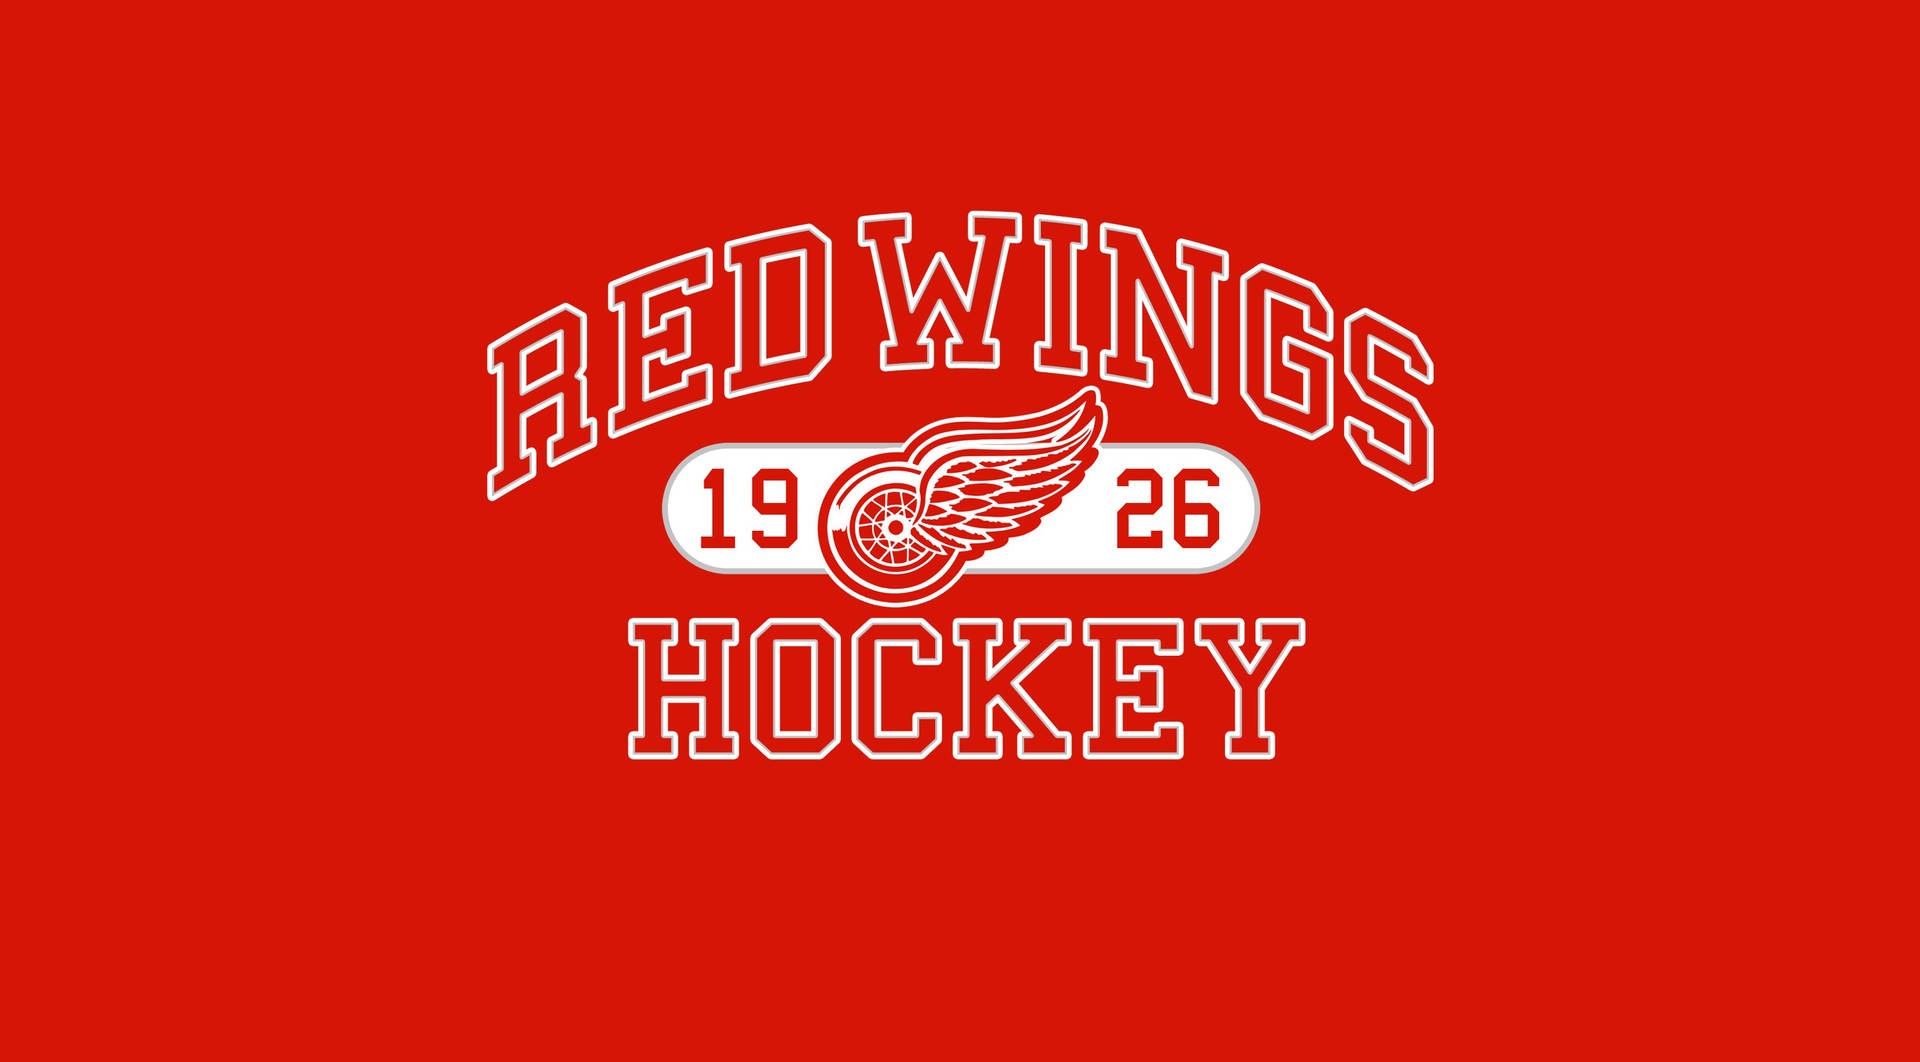 Detroit Red Wings Hockey 1926 Wallpaper